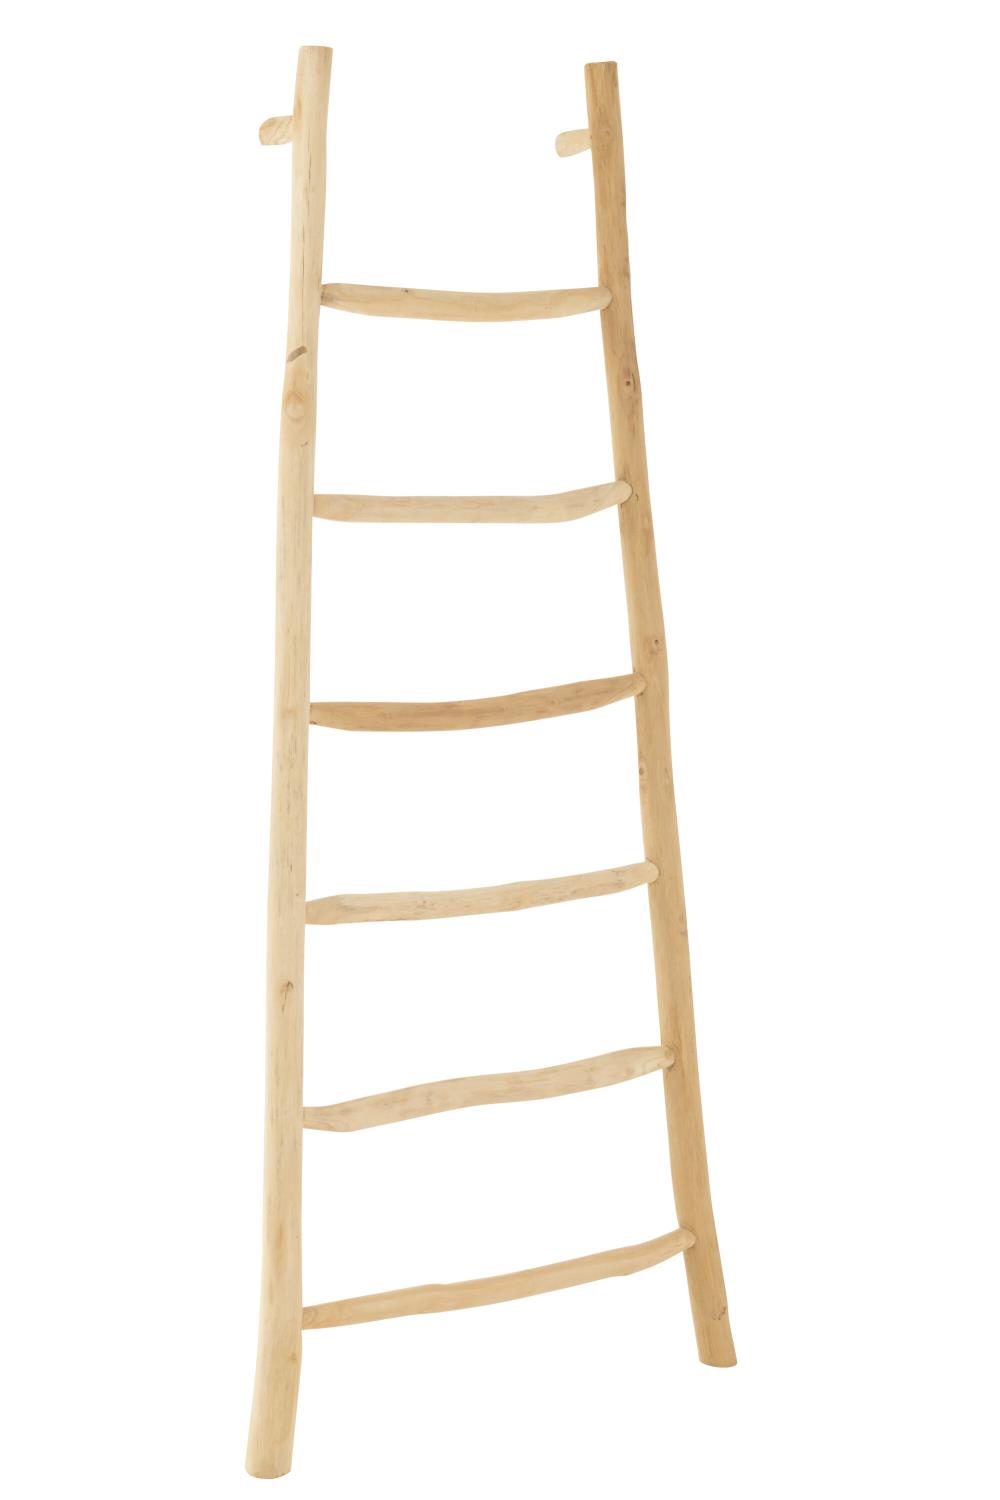 Ladder 6 steps Wood Natur 81x12xh185cm 43783